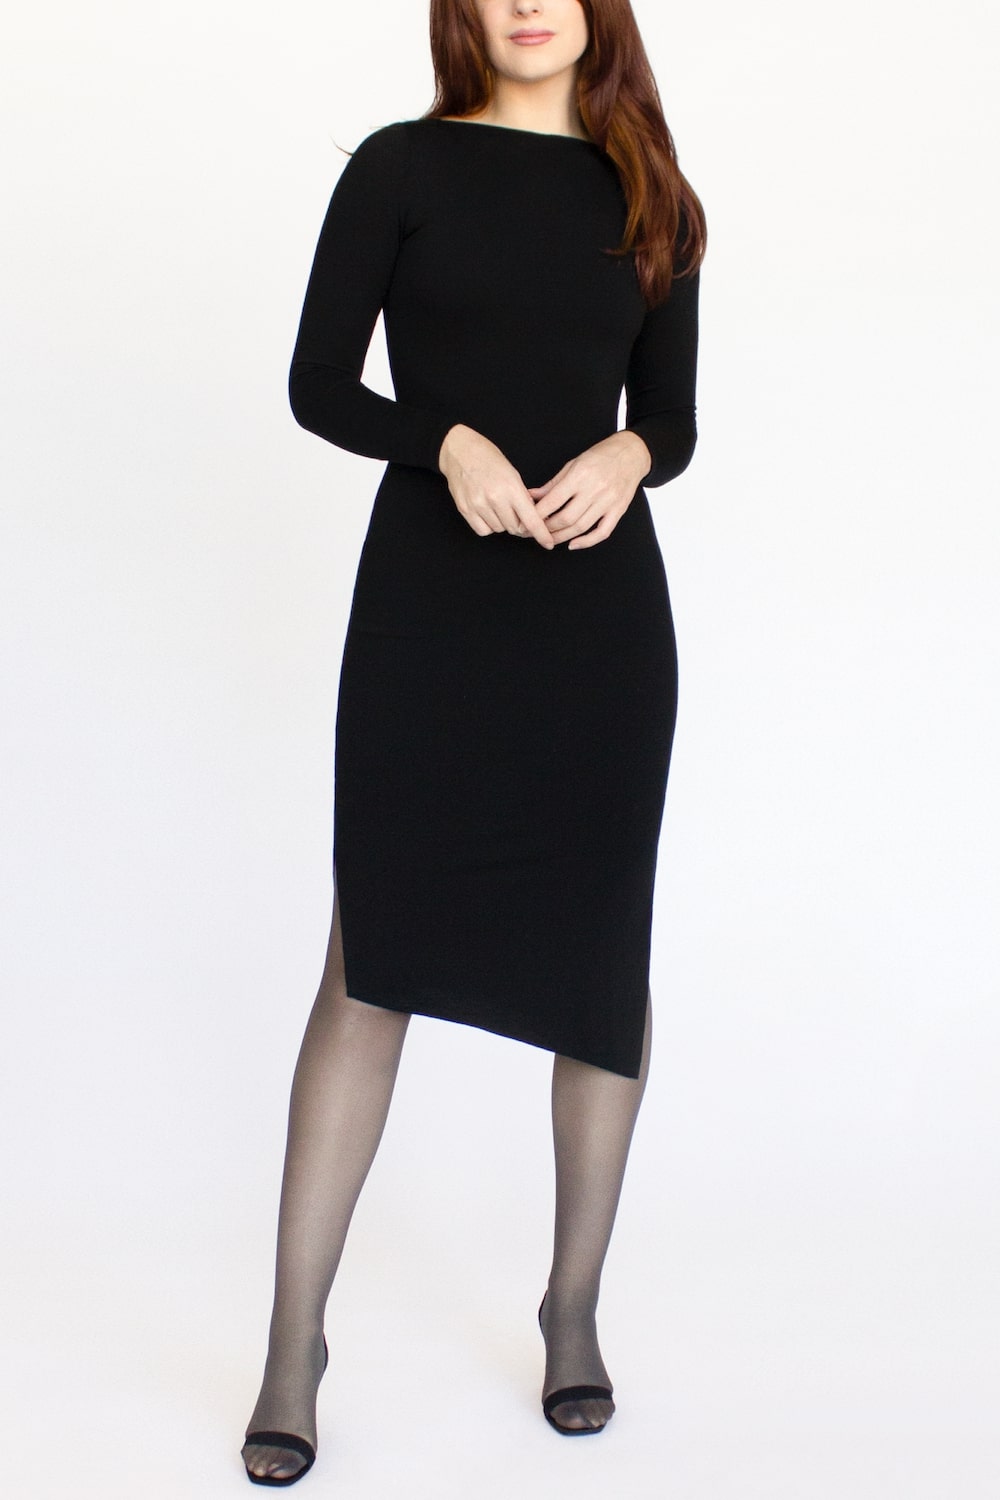 Black Long Sleeve Bodycon Dress With Diamante Detail – Styledup.co.uk